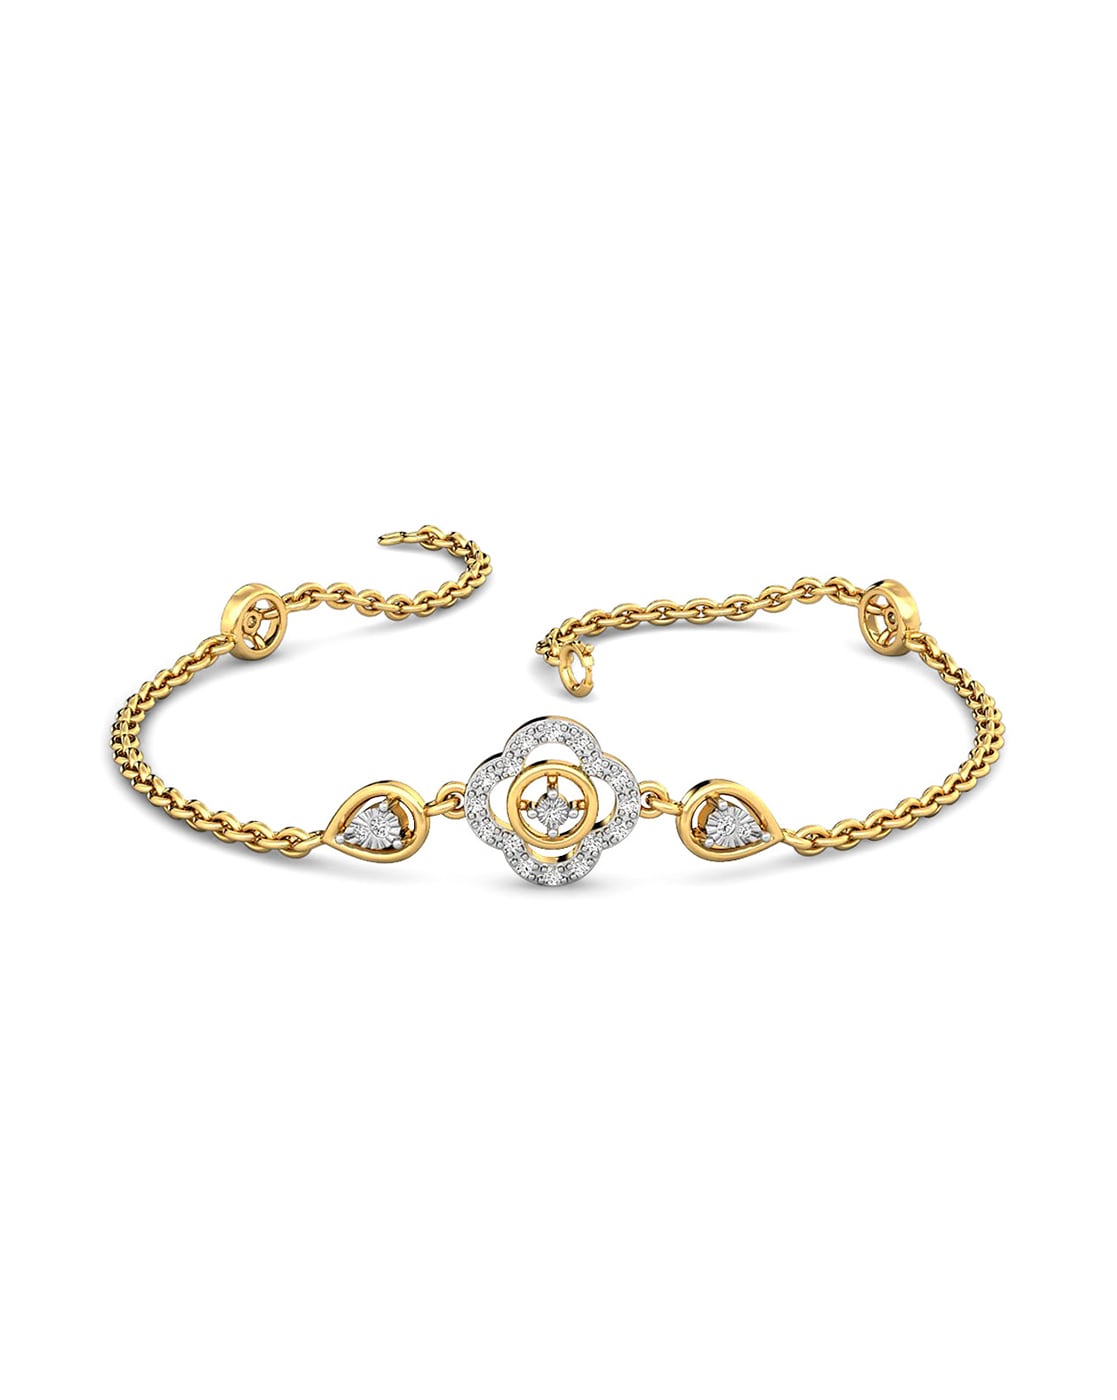 Gold Bracelet for Women | Bracelet Collection | Kalyan jewellers